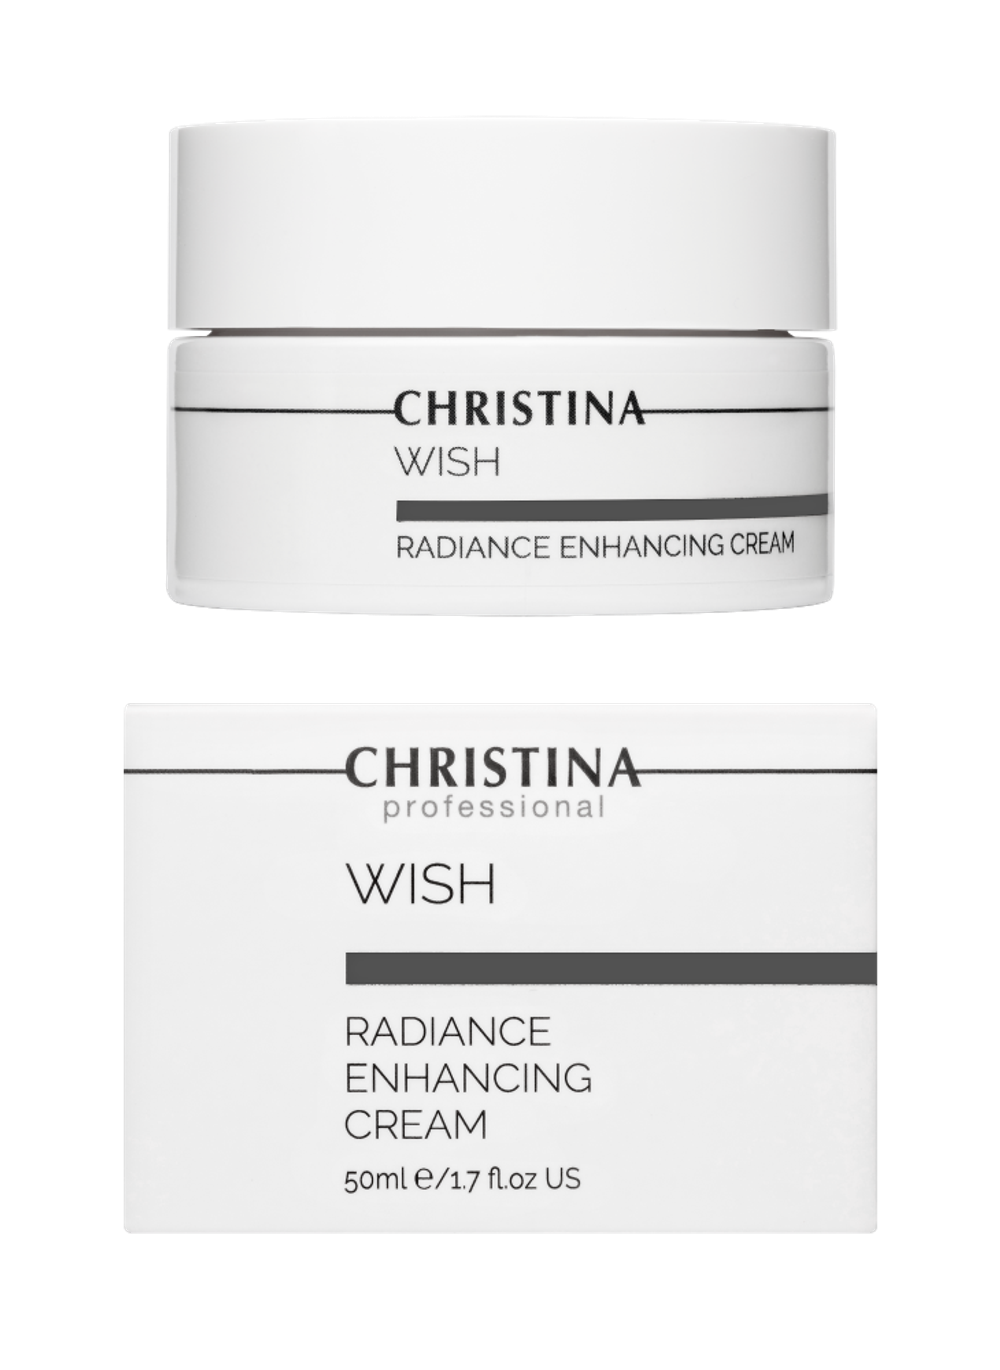 CHRISTINA Wish Radiance Enhancing Cream